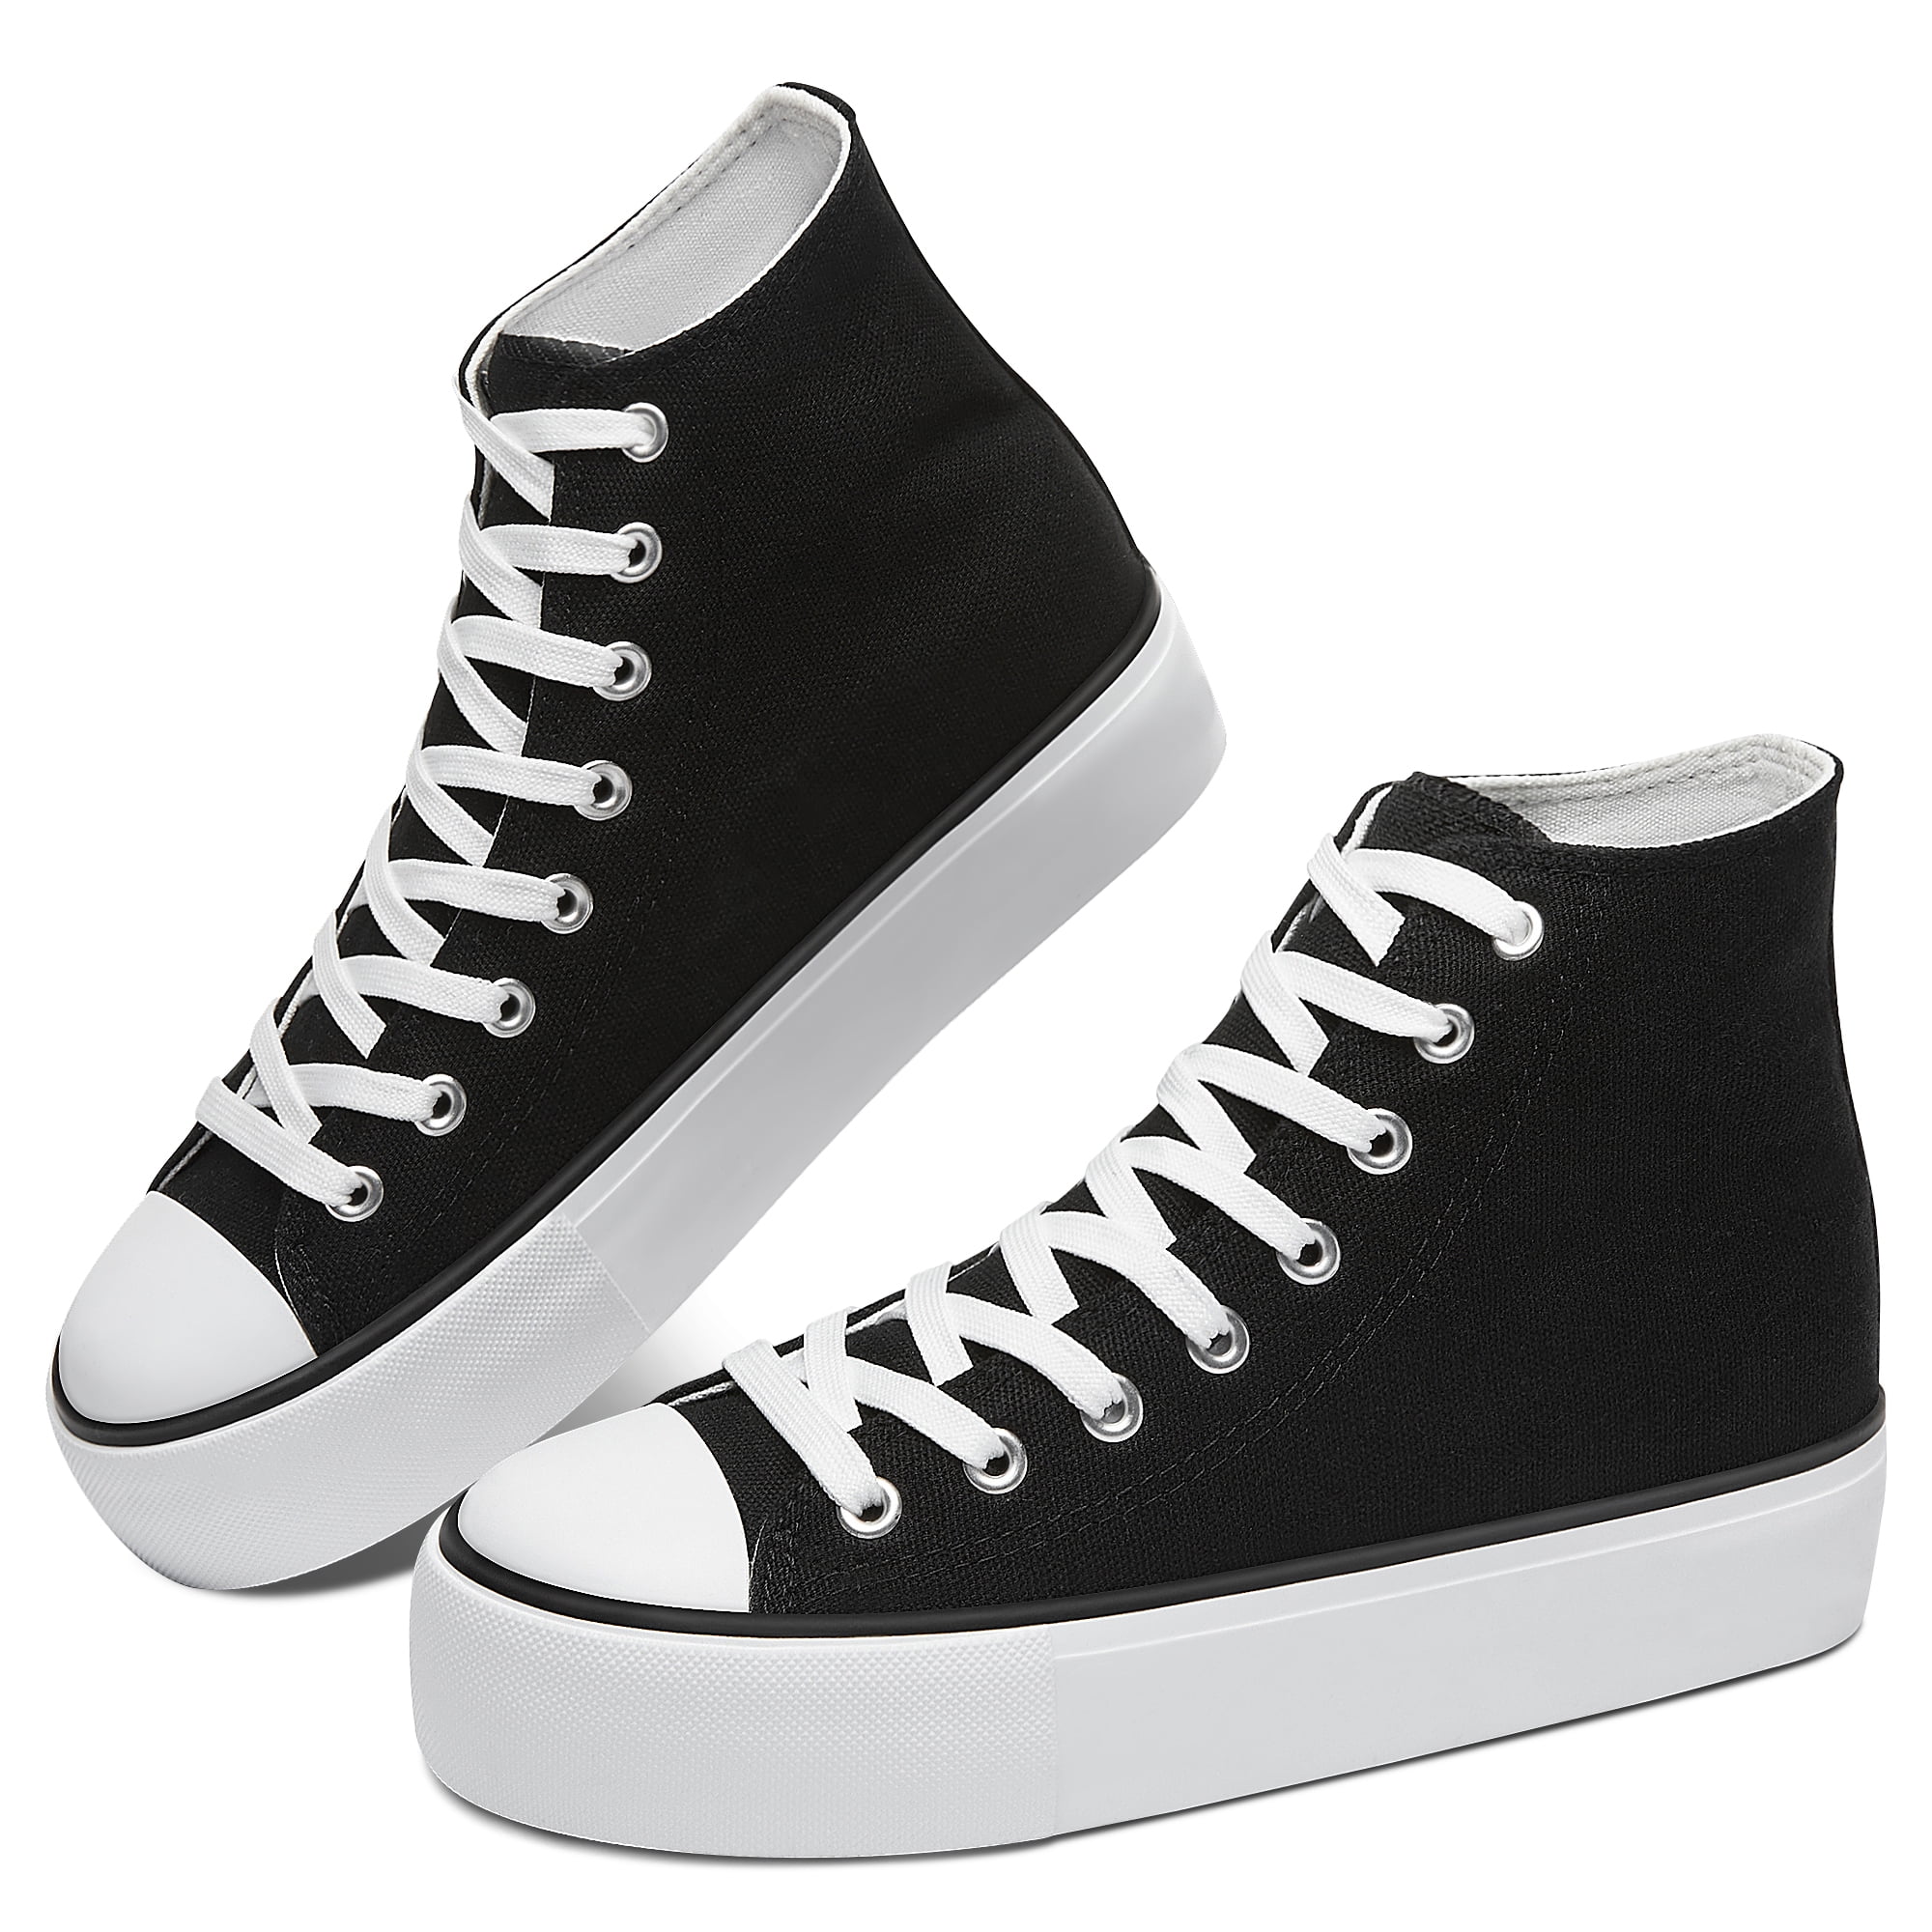 Obtaom Women s Platform High Top Canvas Shoes Comfy Hi Fashion Sneakers For women Cute Mid Calf Thick Sole Walking Shoes Black US8 628d54a0 fc16 42bc 874a b97050c97693.718b7b73997e195b576086d524c9b6af